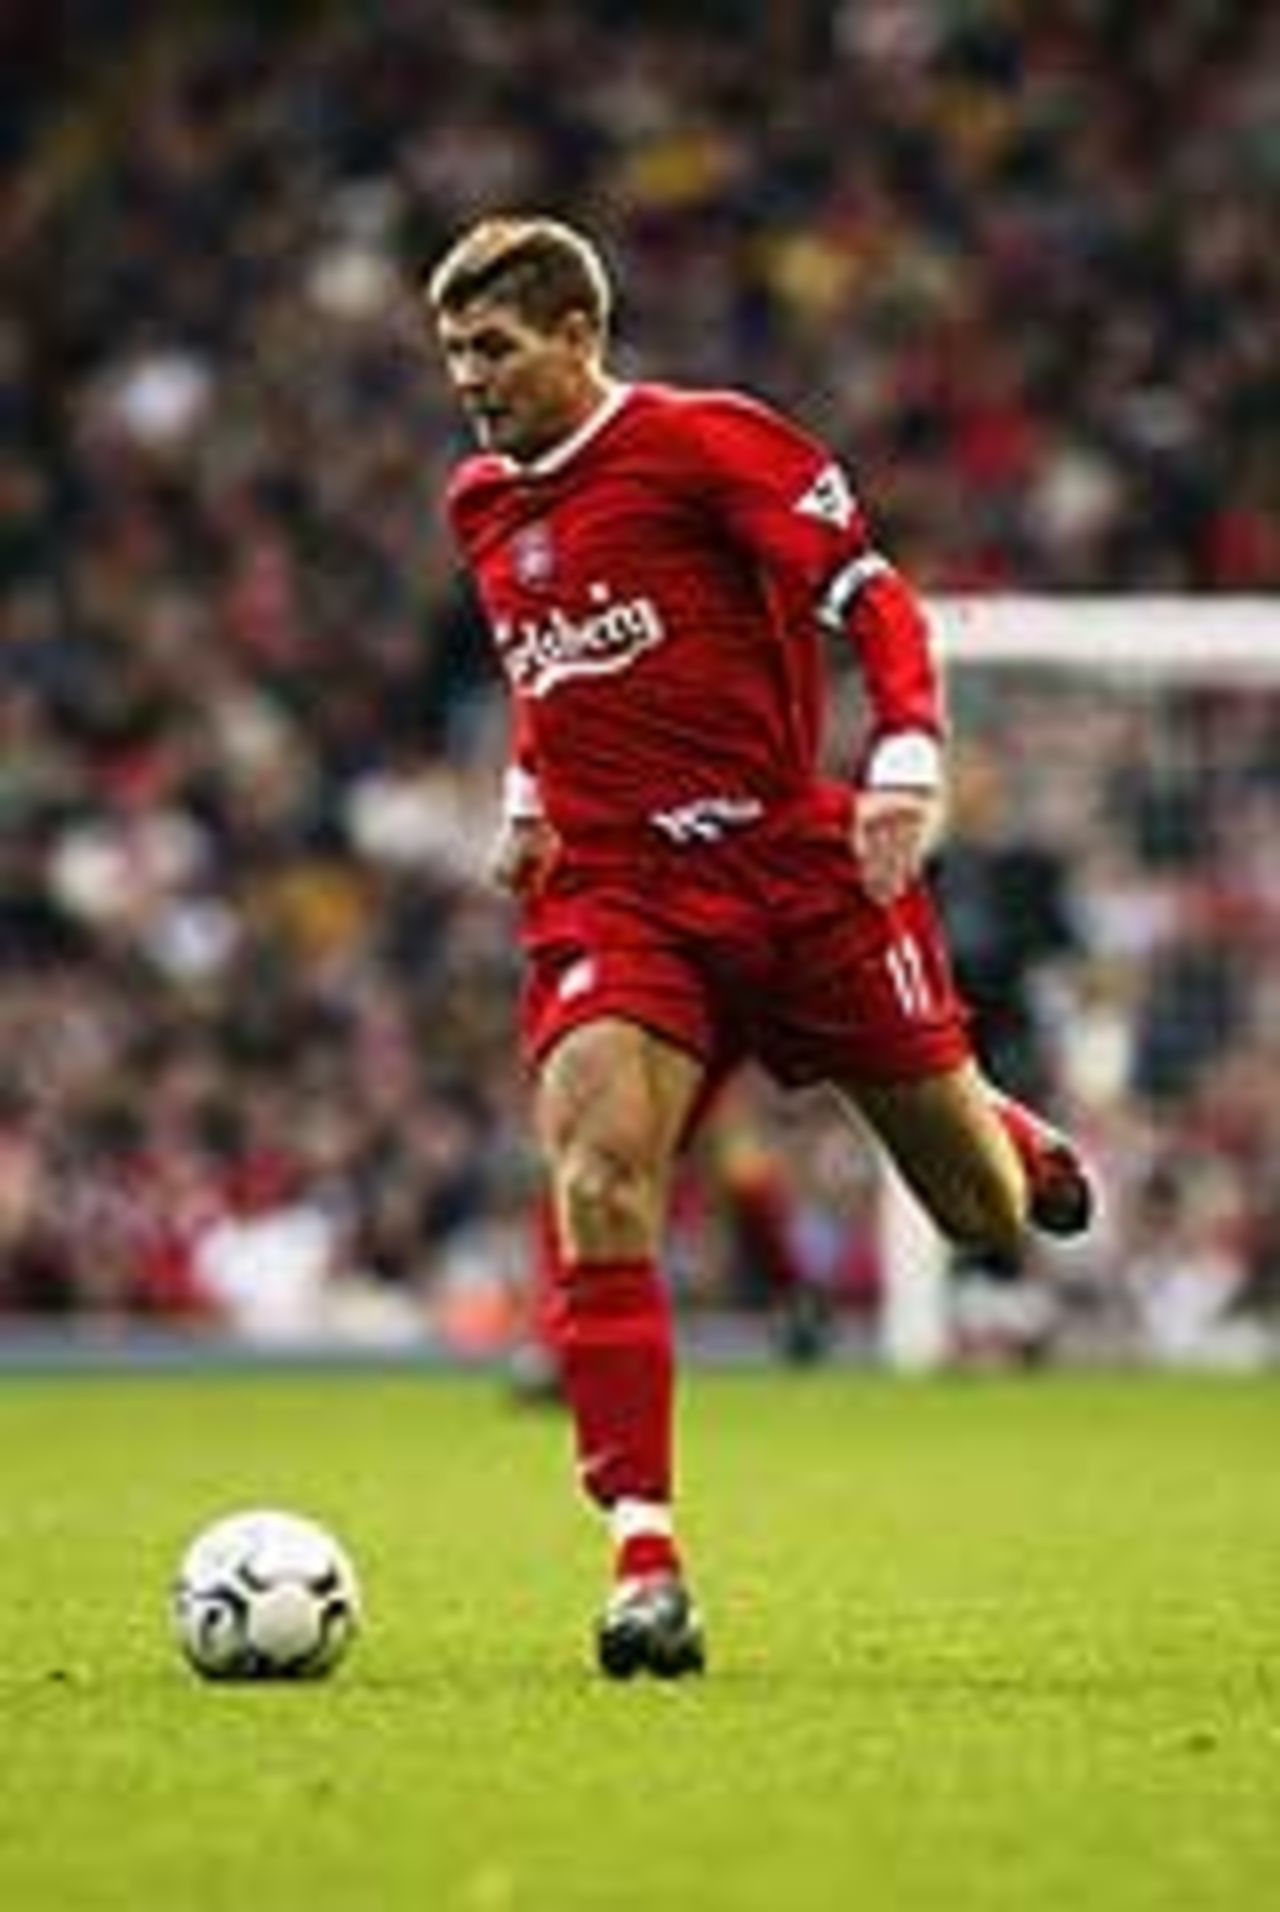 Steven Gerrard playing for Liverpool Football Club - December 2003